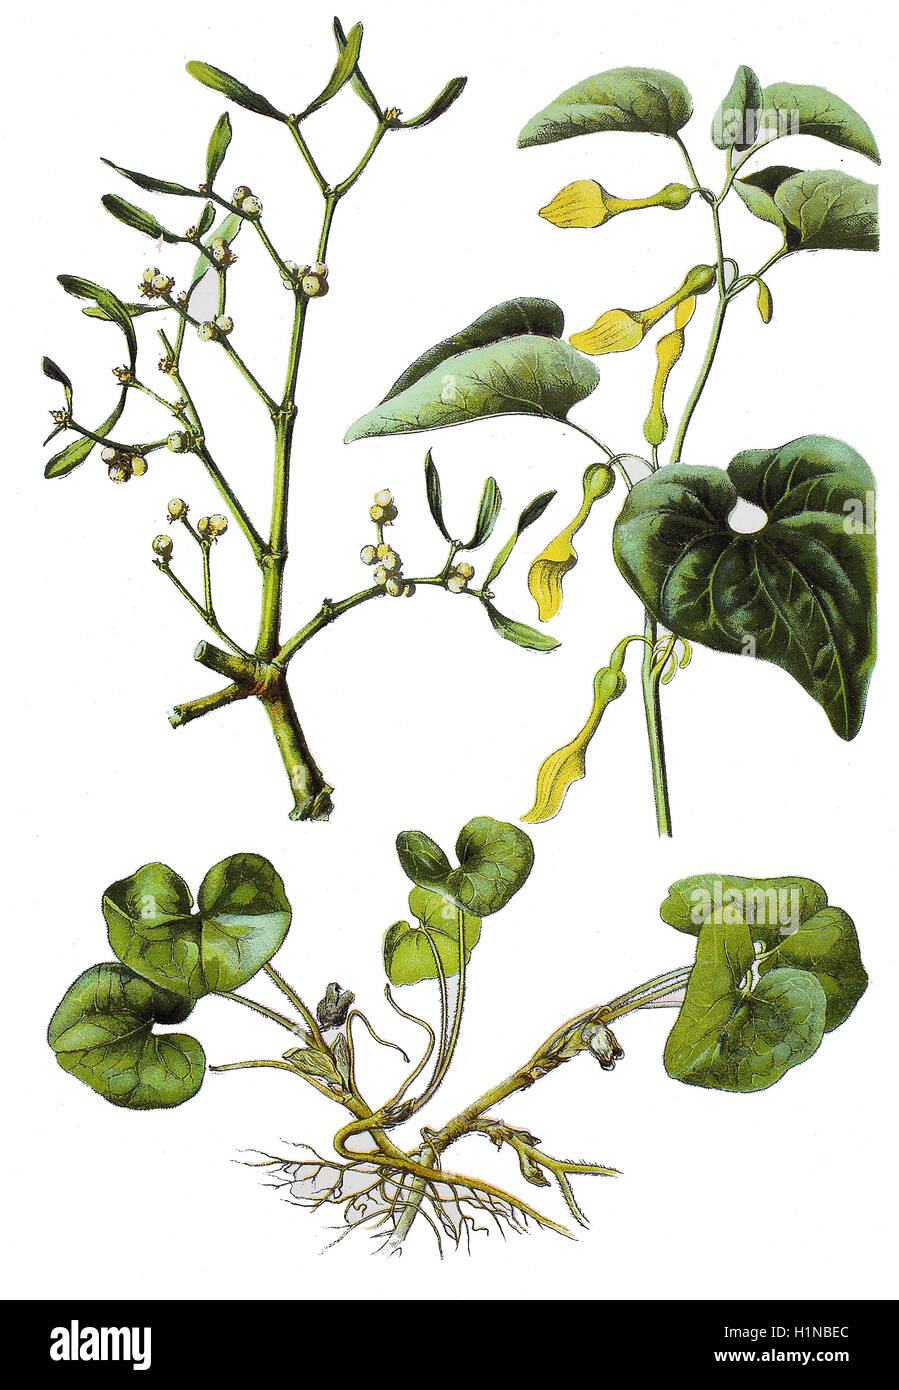 Unione mistleto, Viscum album (in alto a sinistra), hazelwort, Asarum europaeum (bottem), birthwort, Aristolochia clematitis (in alto a destra) Foto Stock